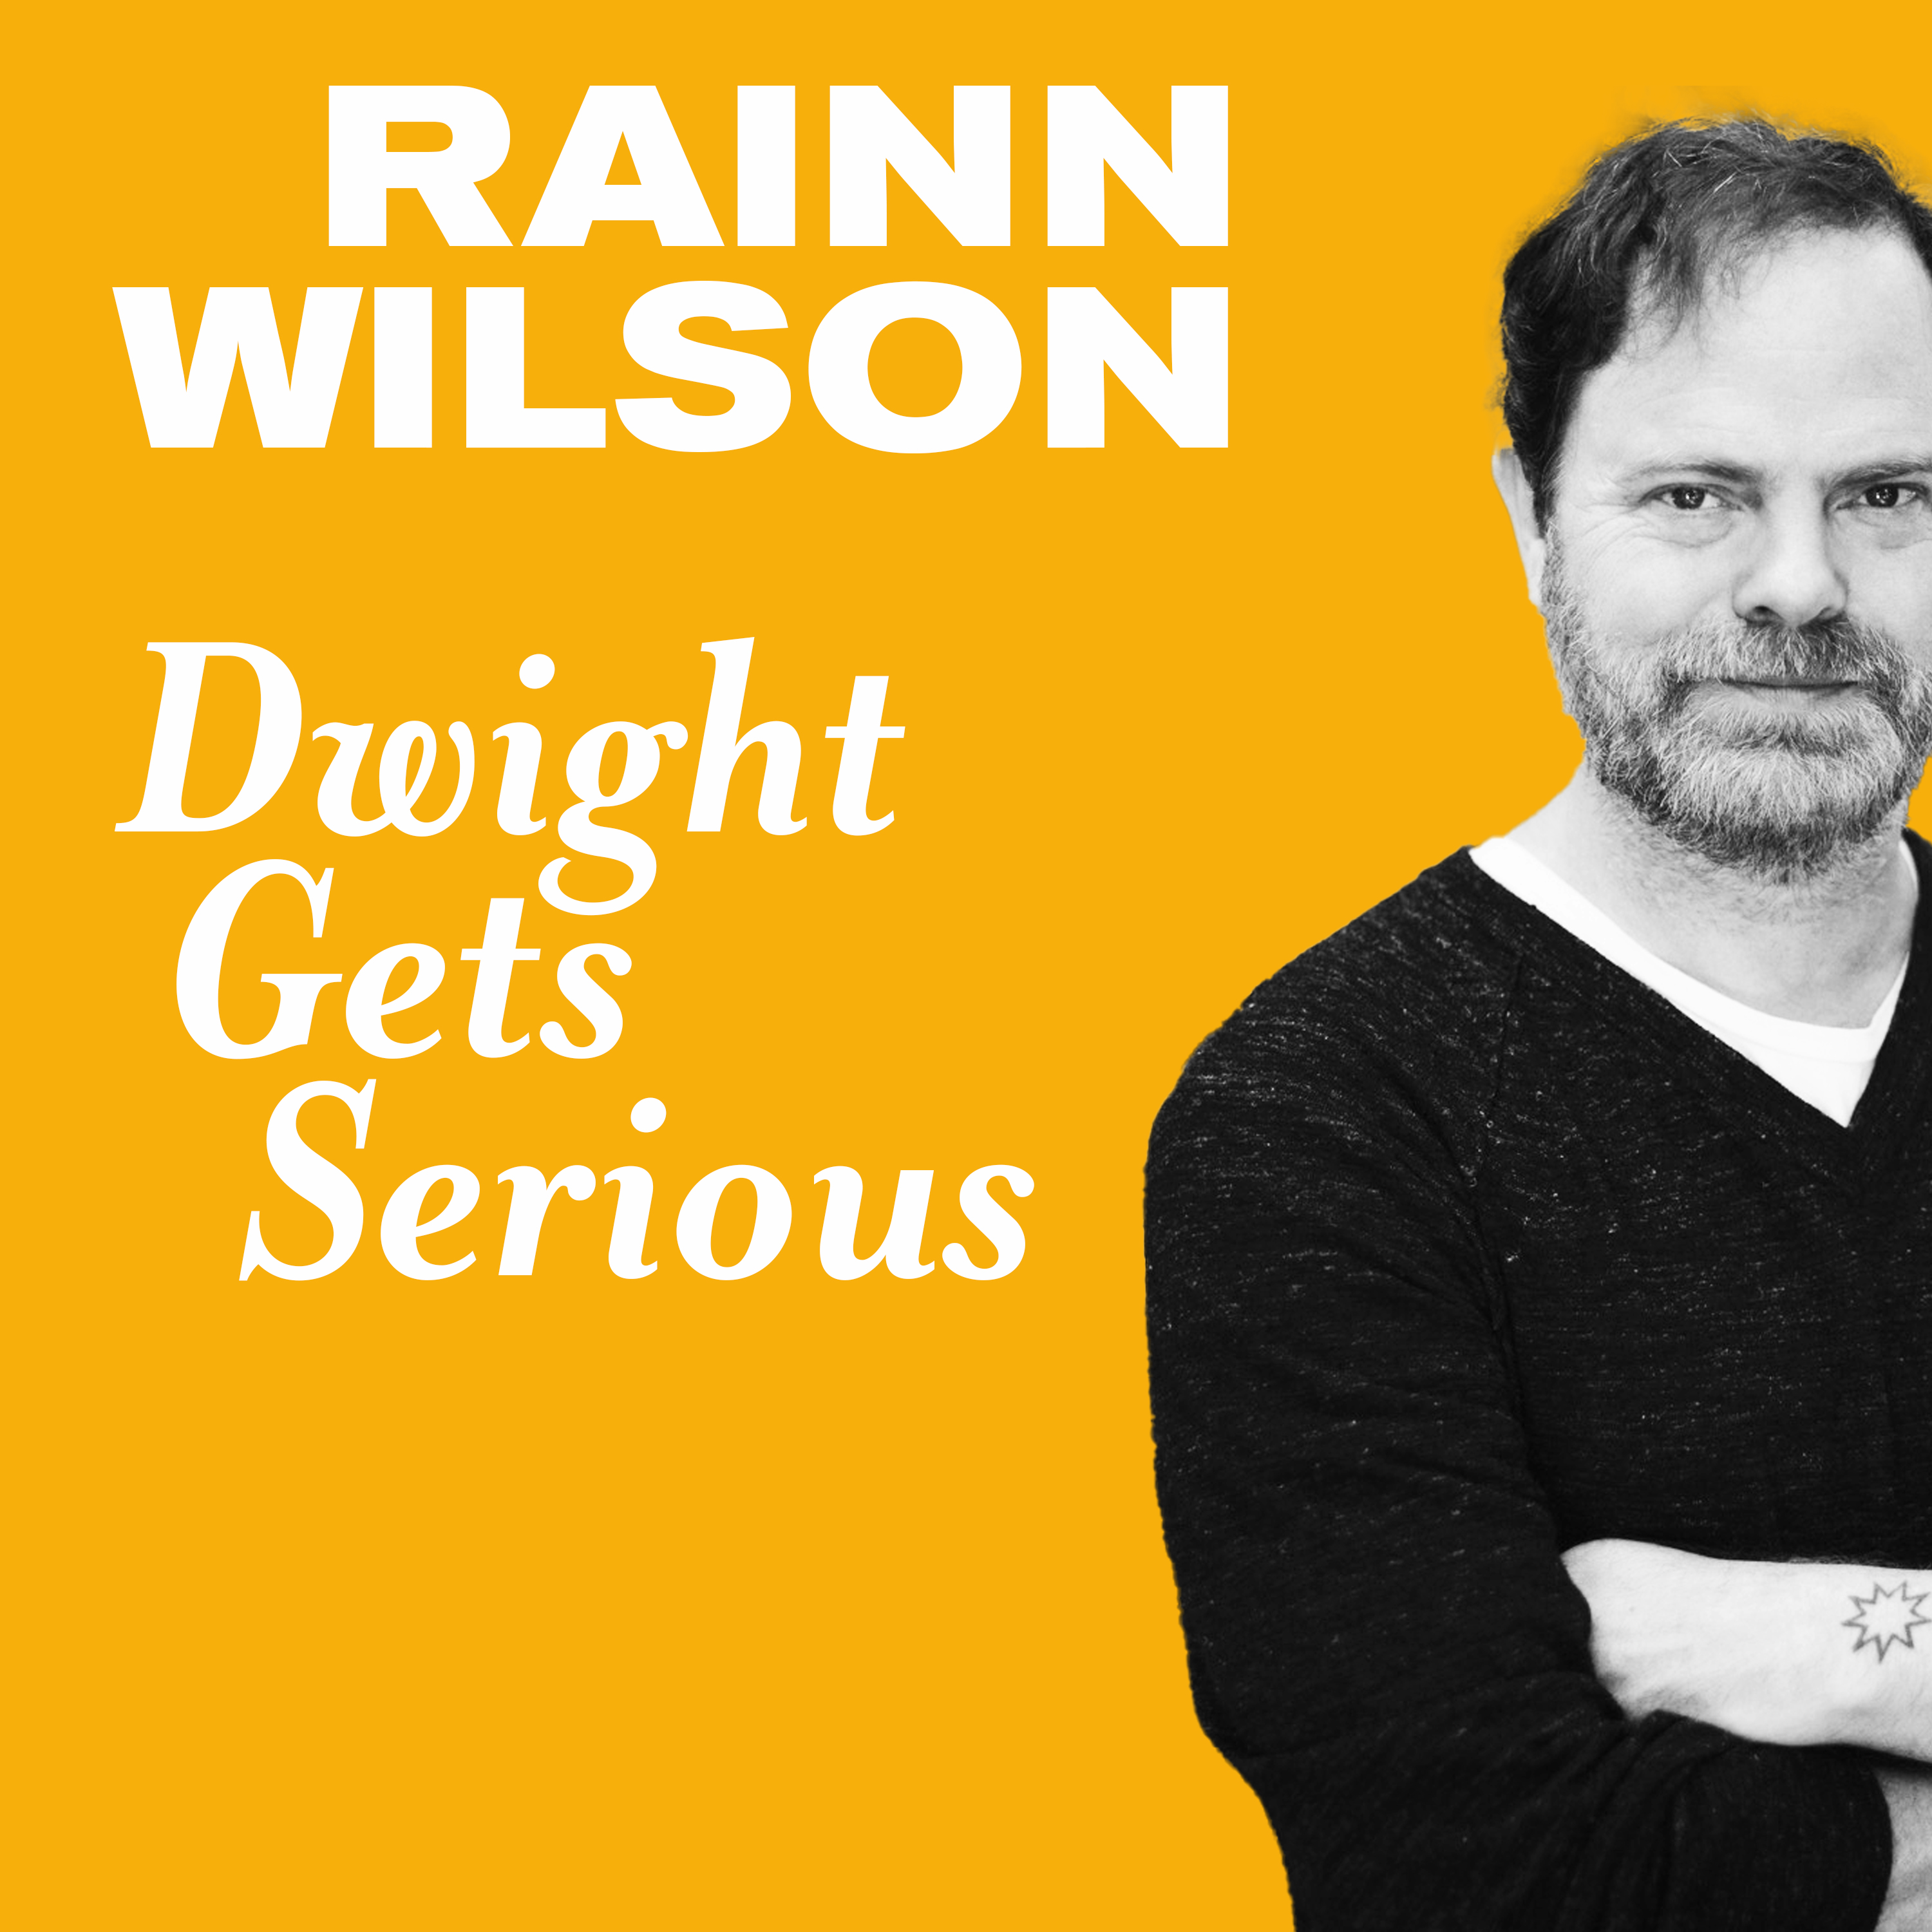 Rainn Wilson on Dwight Gets Serious 